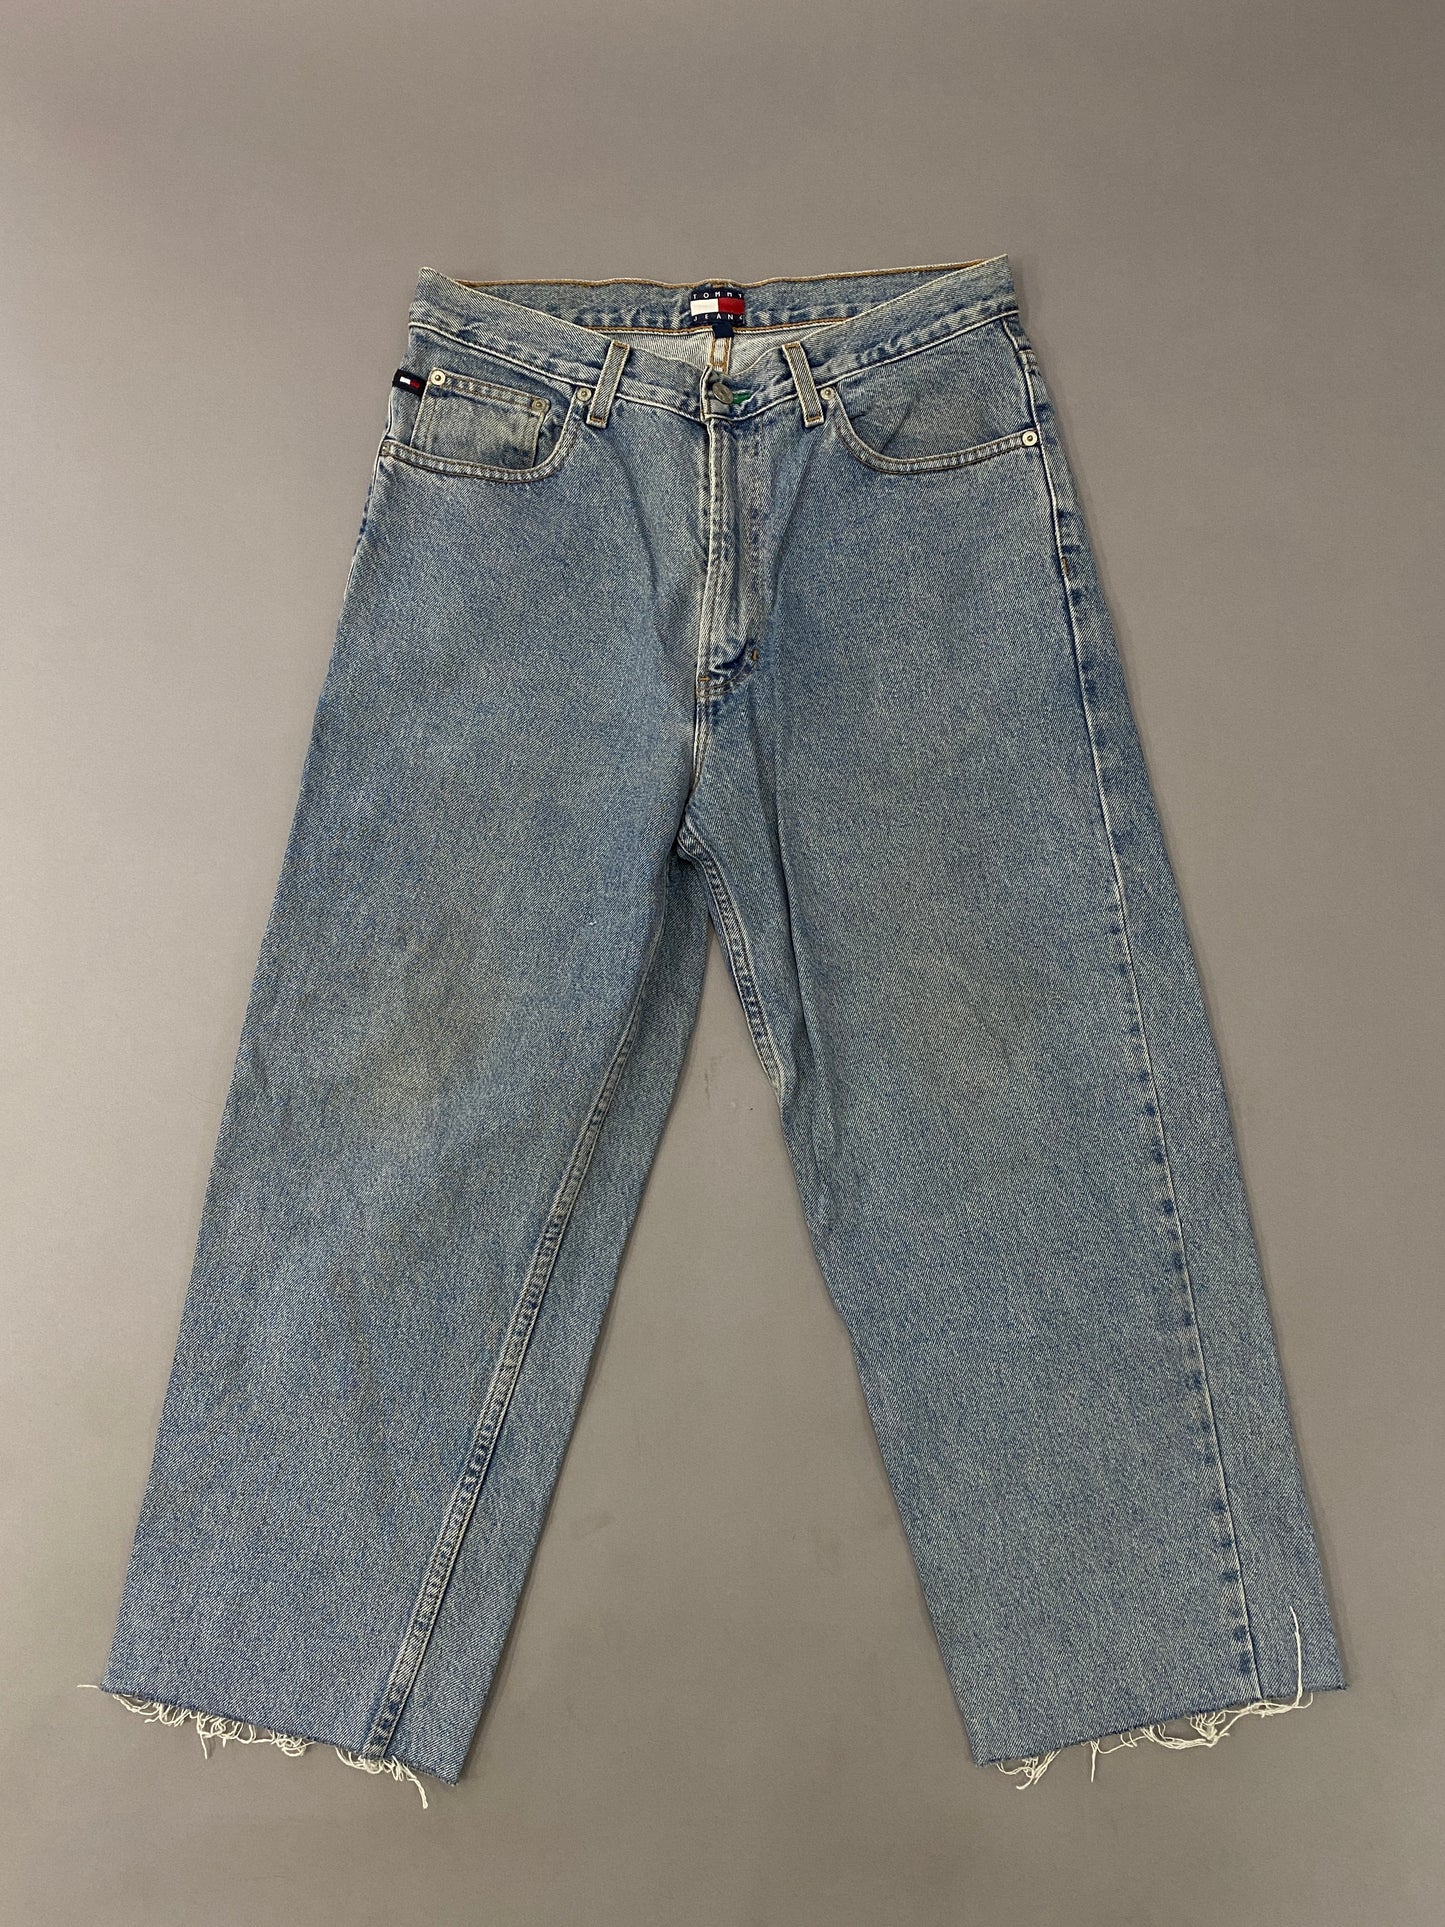 Vintage Tommy Jeans - 32 x 30